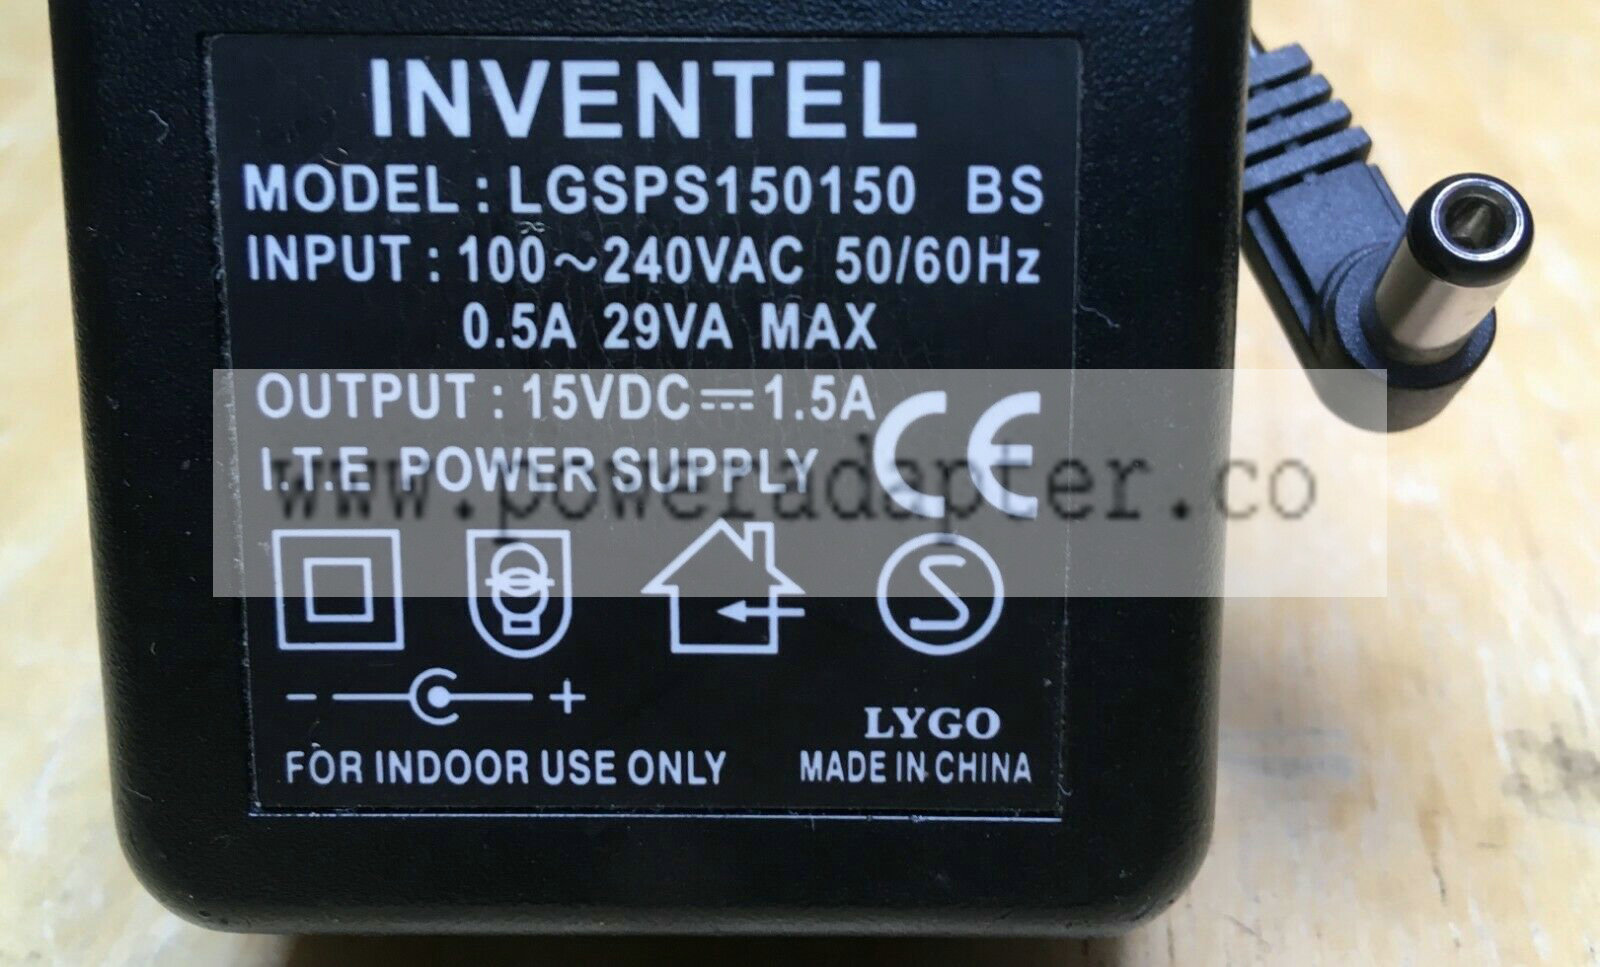 GENUINE Inventel LGSPS150150 15v DC 1.5A Power Supply mains adapter Charger PSU GENUINE Inventel LGSPS150150 15v DC 1